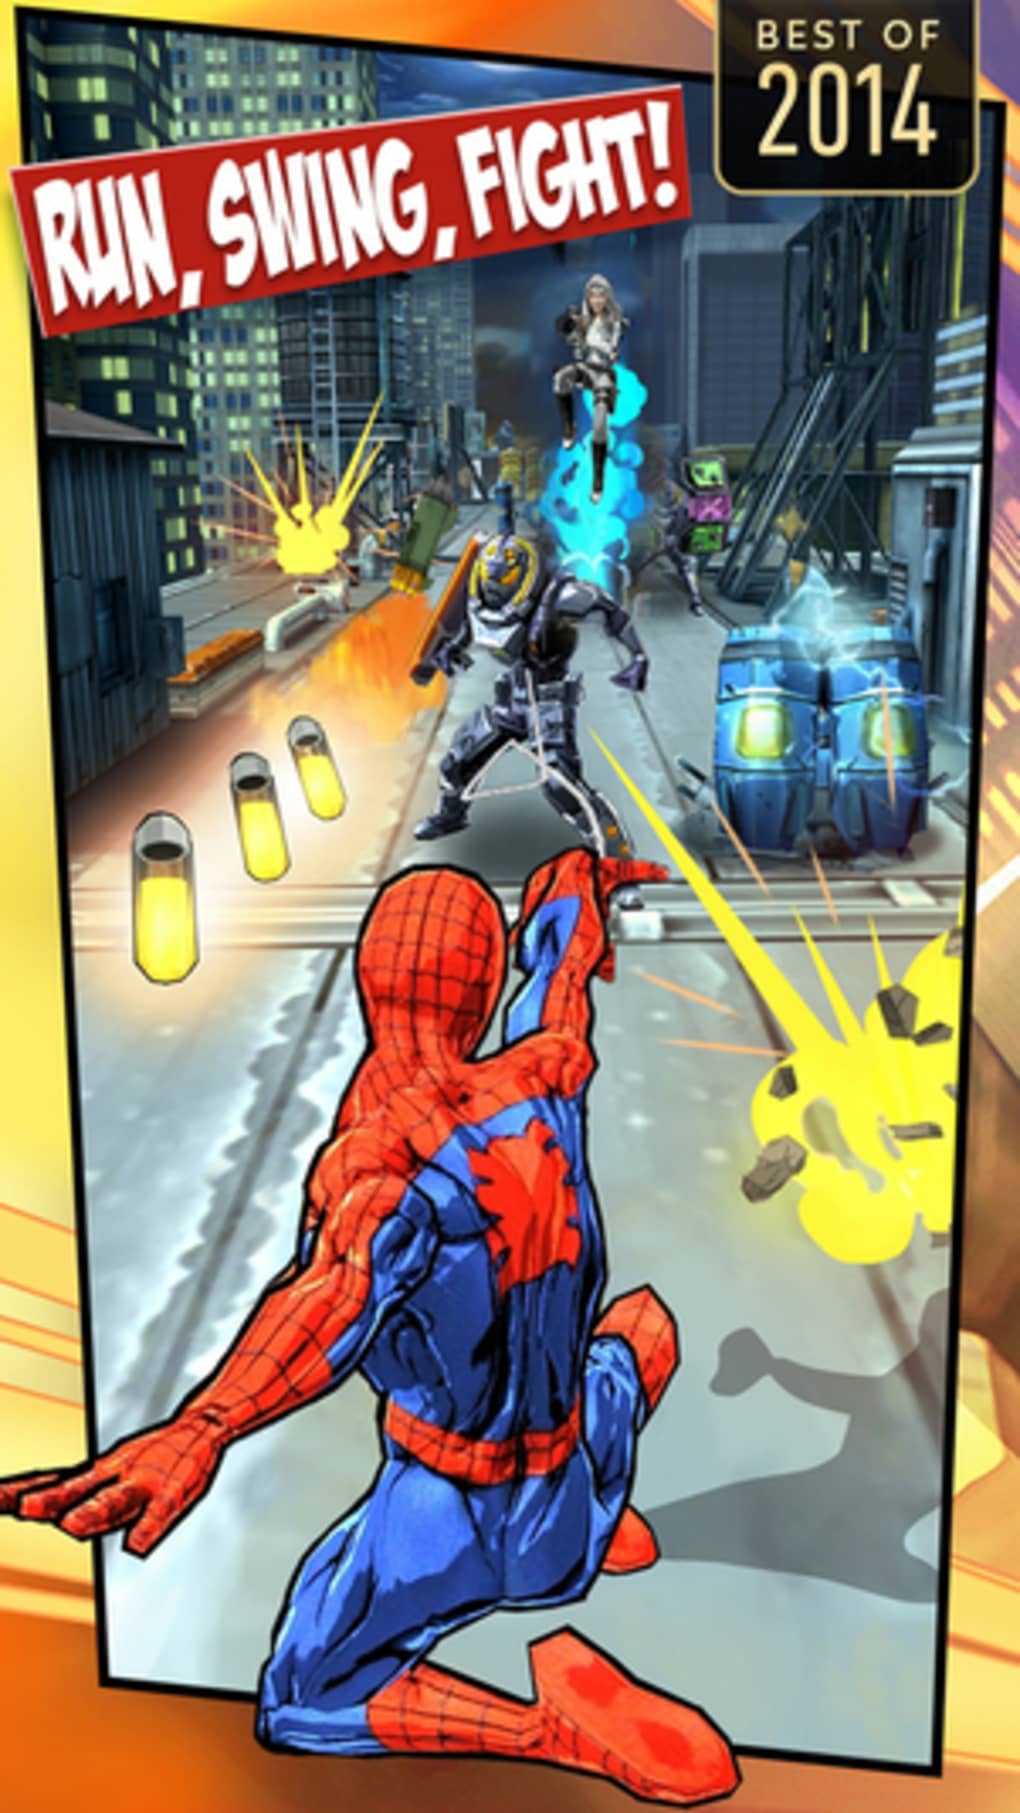 spider man unlimited ios download